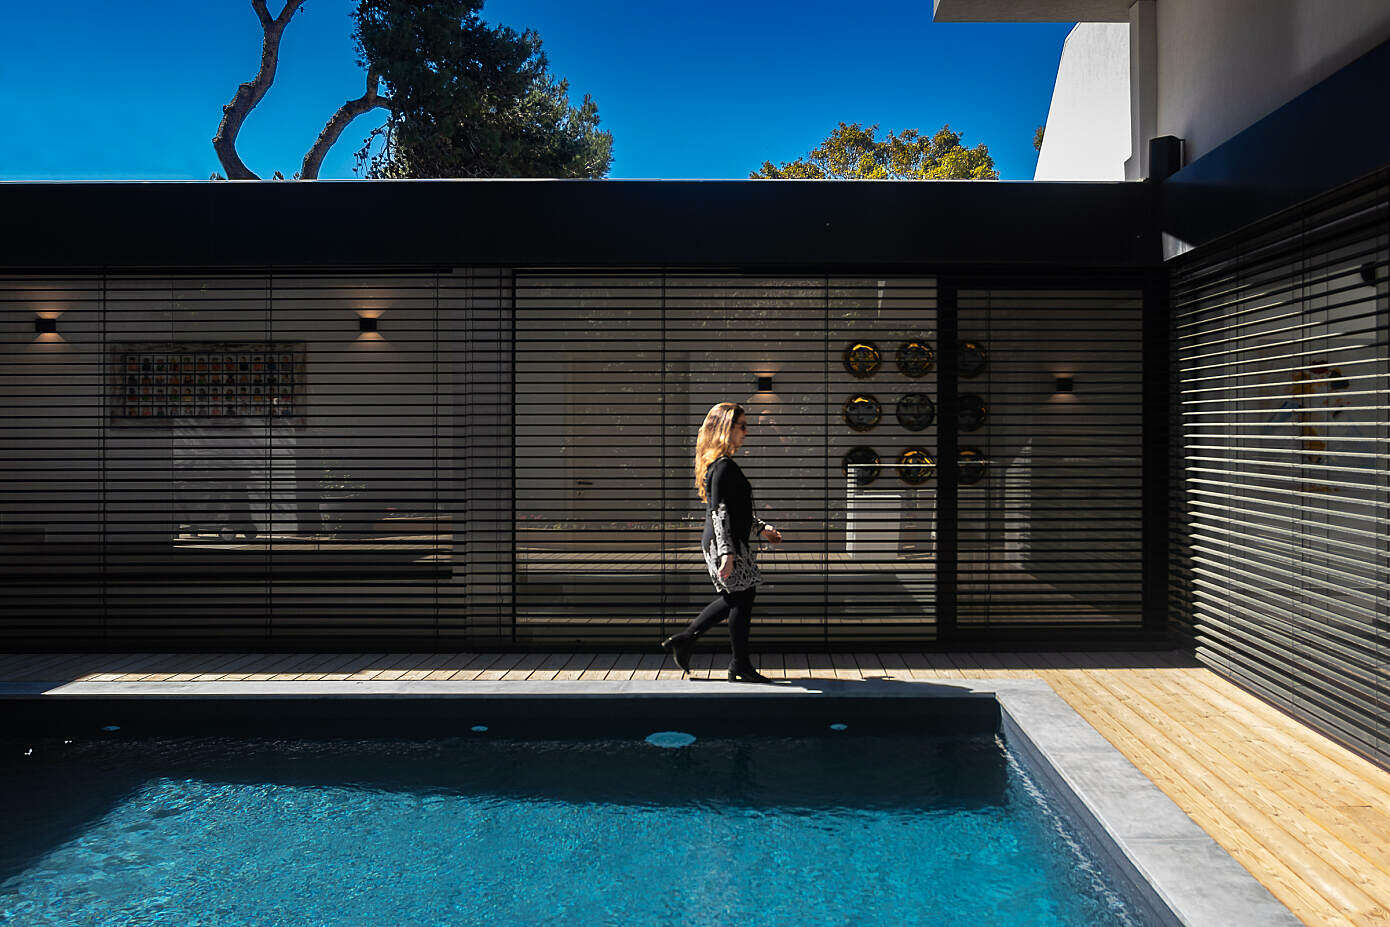 Residence in Haifa by Saab Architects